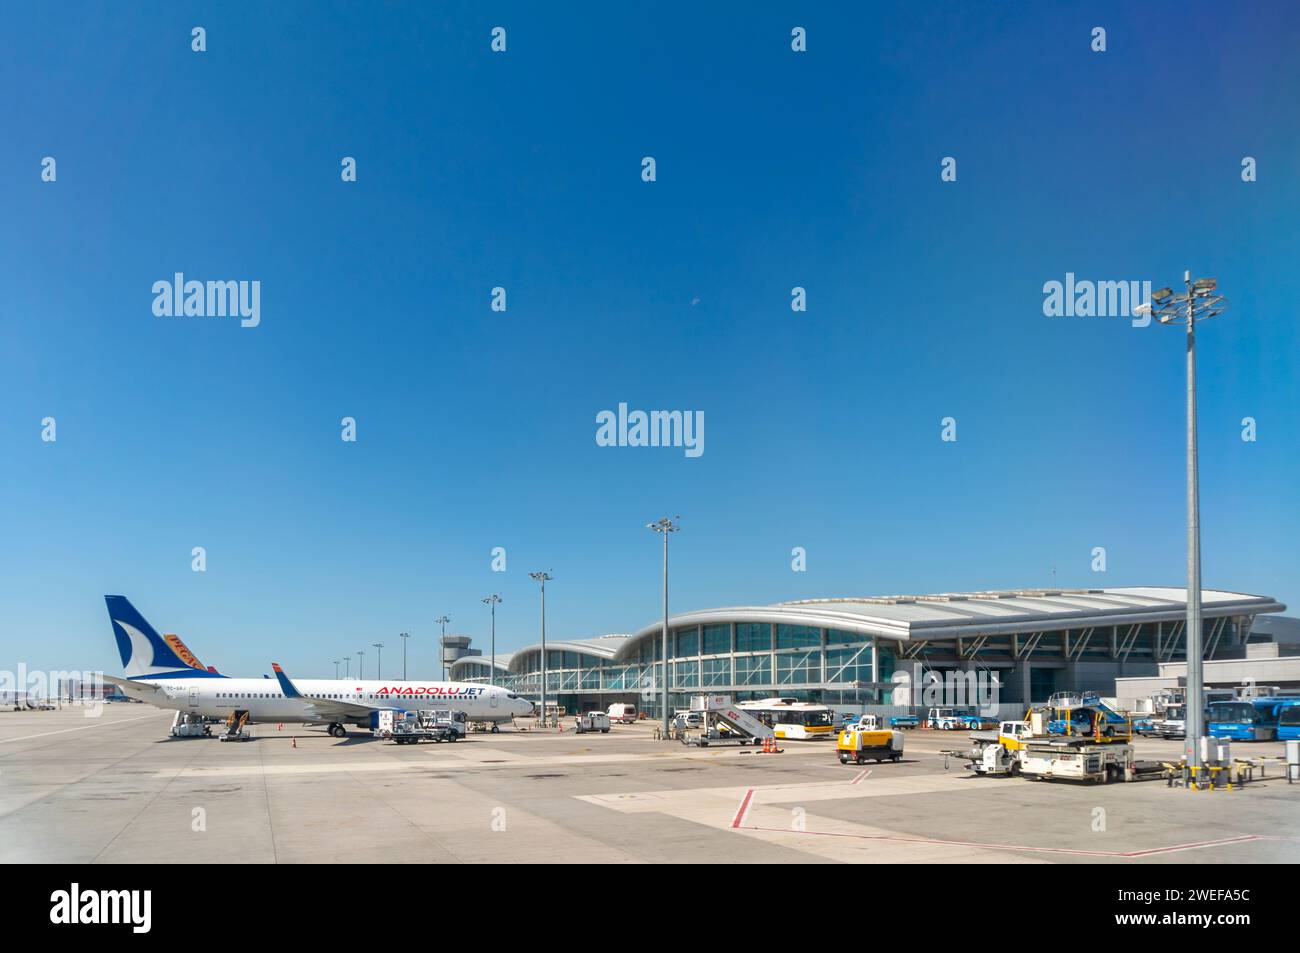 Anadolujet's airplane ready for takeoff at Sabiha Gokcen International Airport at Istanbul, Turkey. (2017) Stock Photo